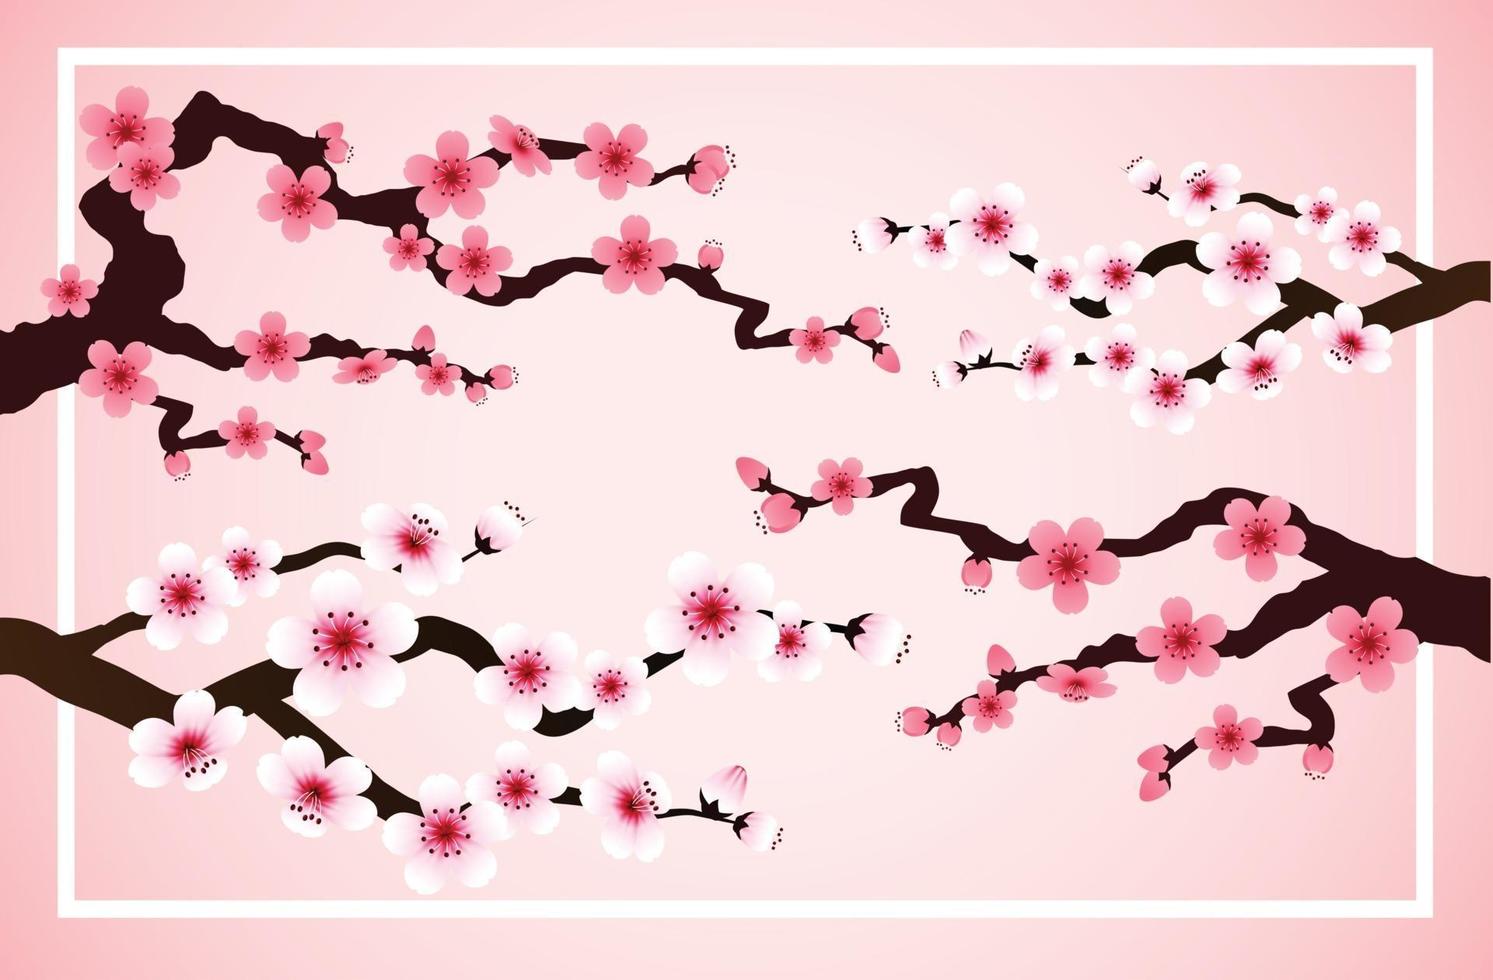 ssakura falling petals vector on pink banner background.